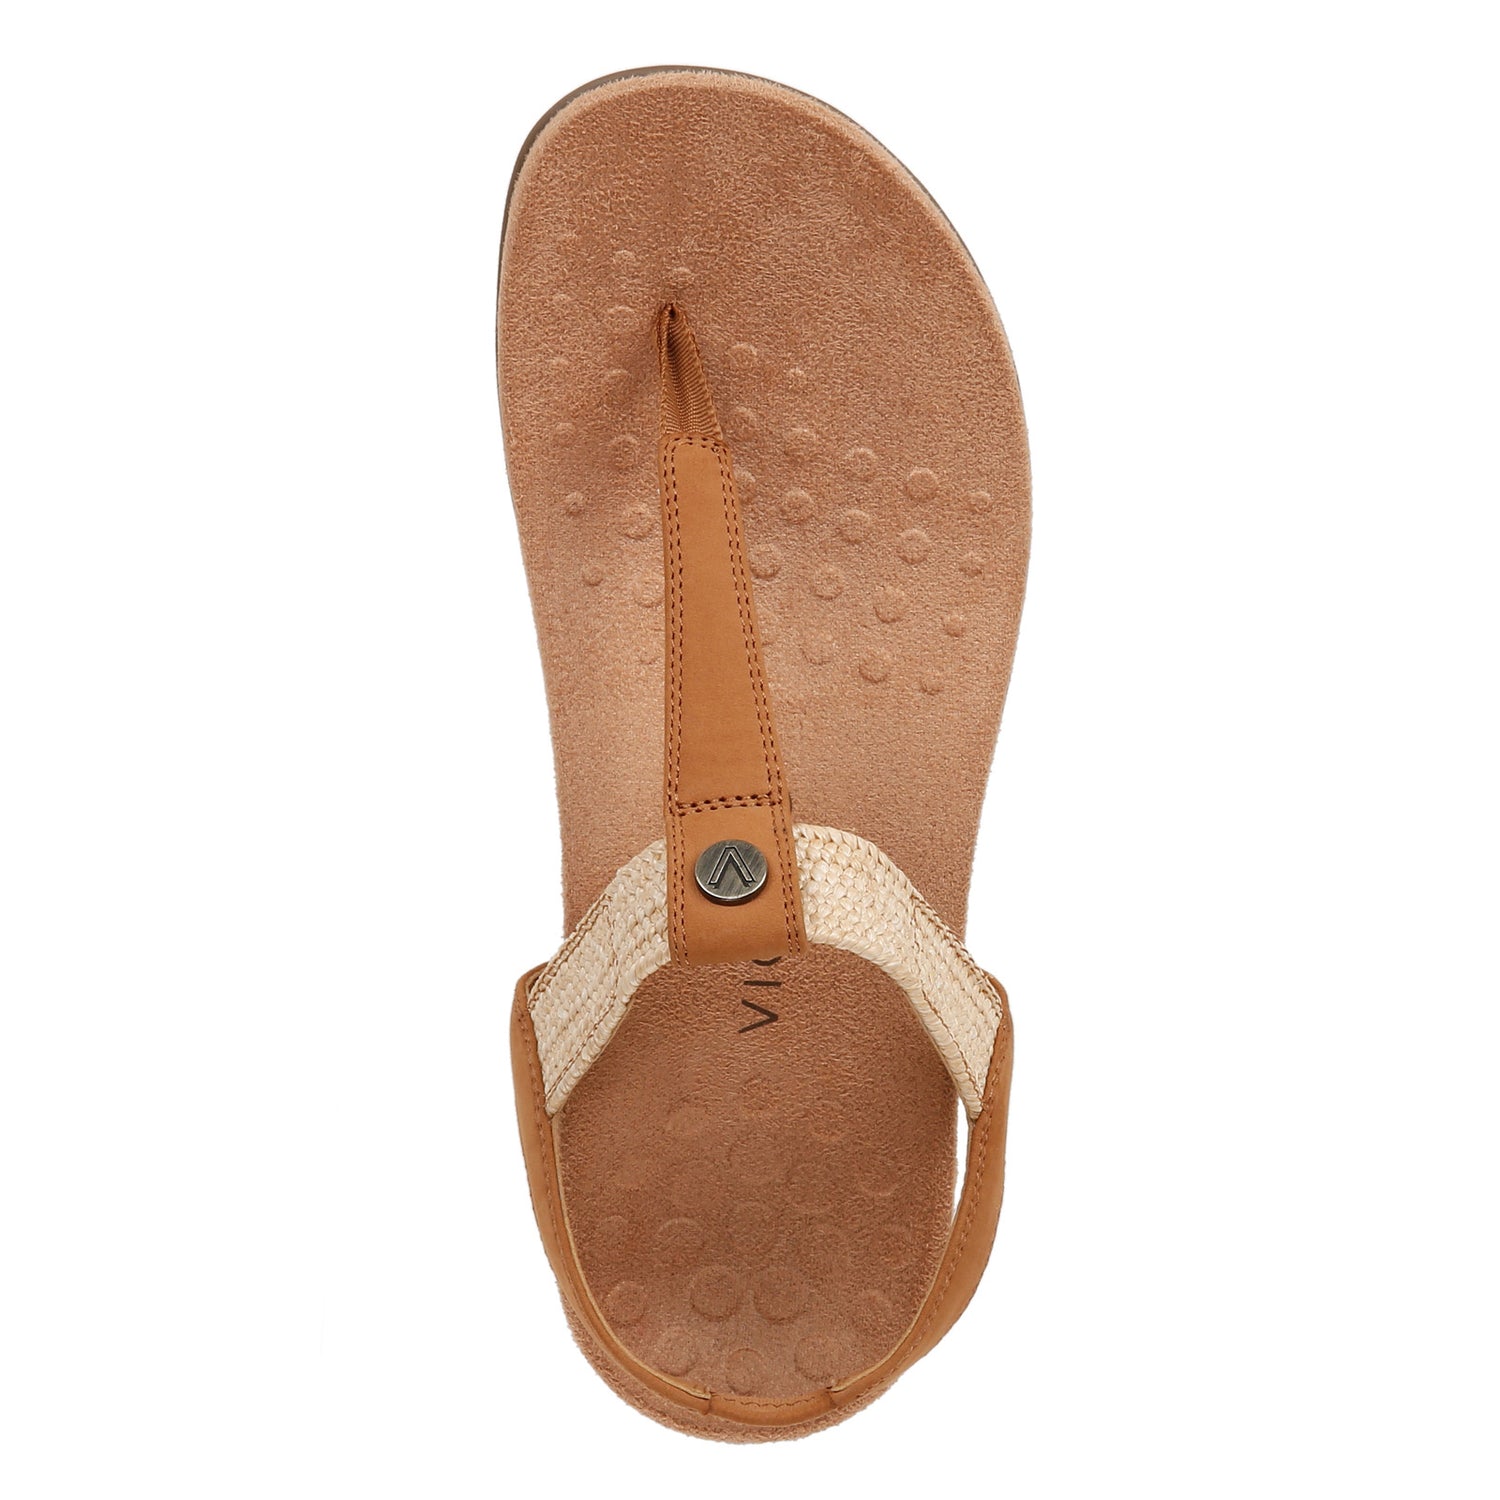 Vionic Lauren Cognac Brown Slides Slip On Sandals Size 9 Wide